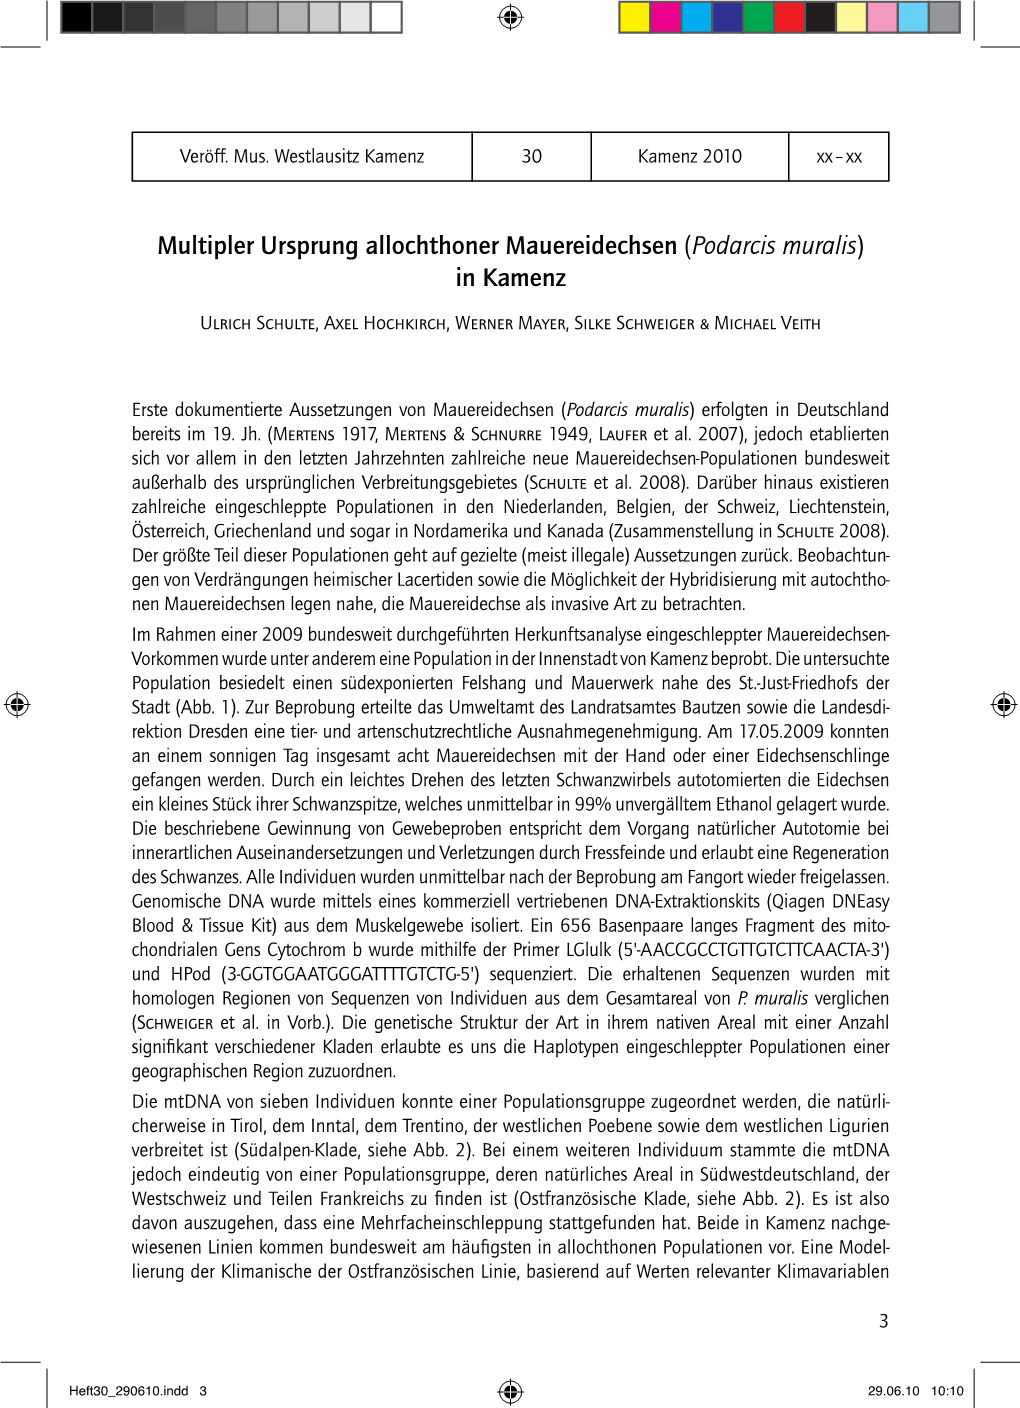 Multipler Ursprung Allochthoner Mauereidechsen (Podarcis Muralis) in Kamenz